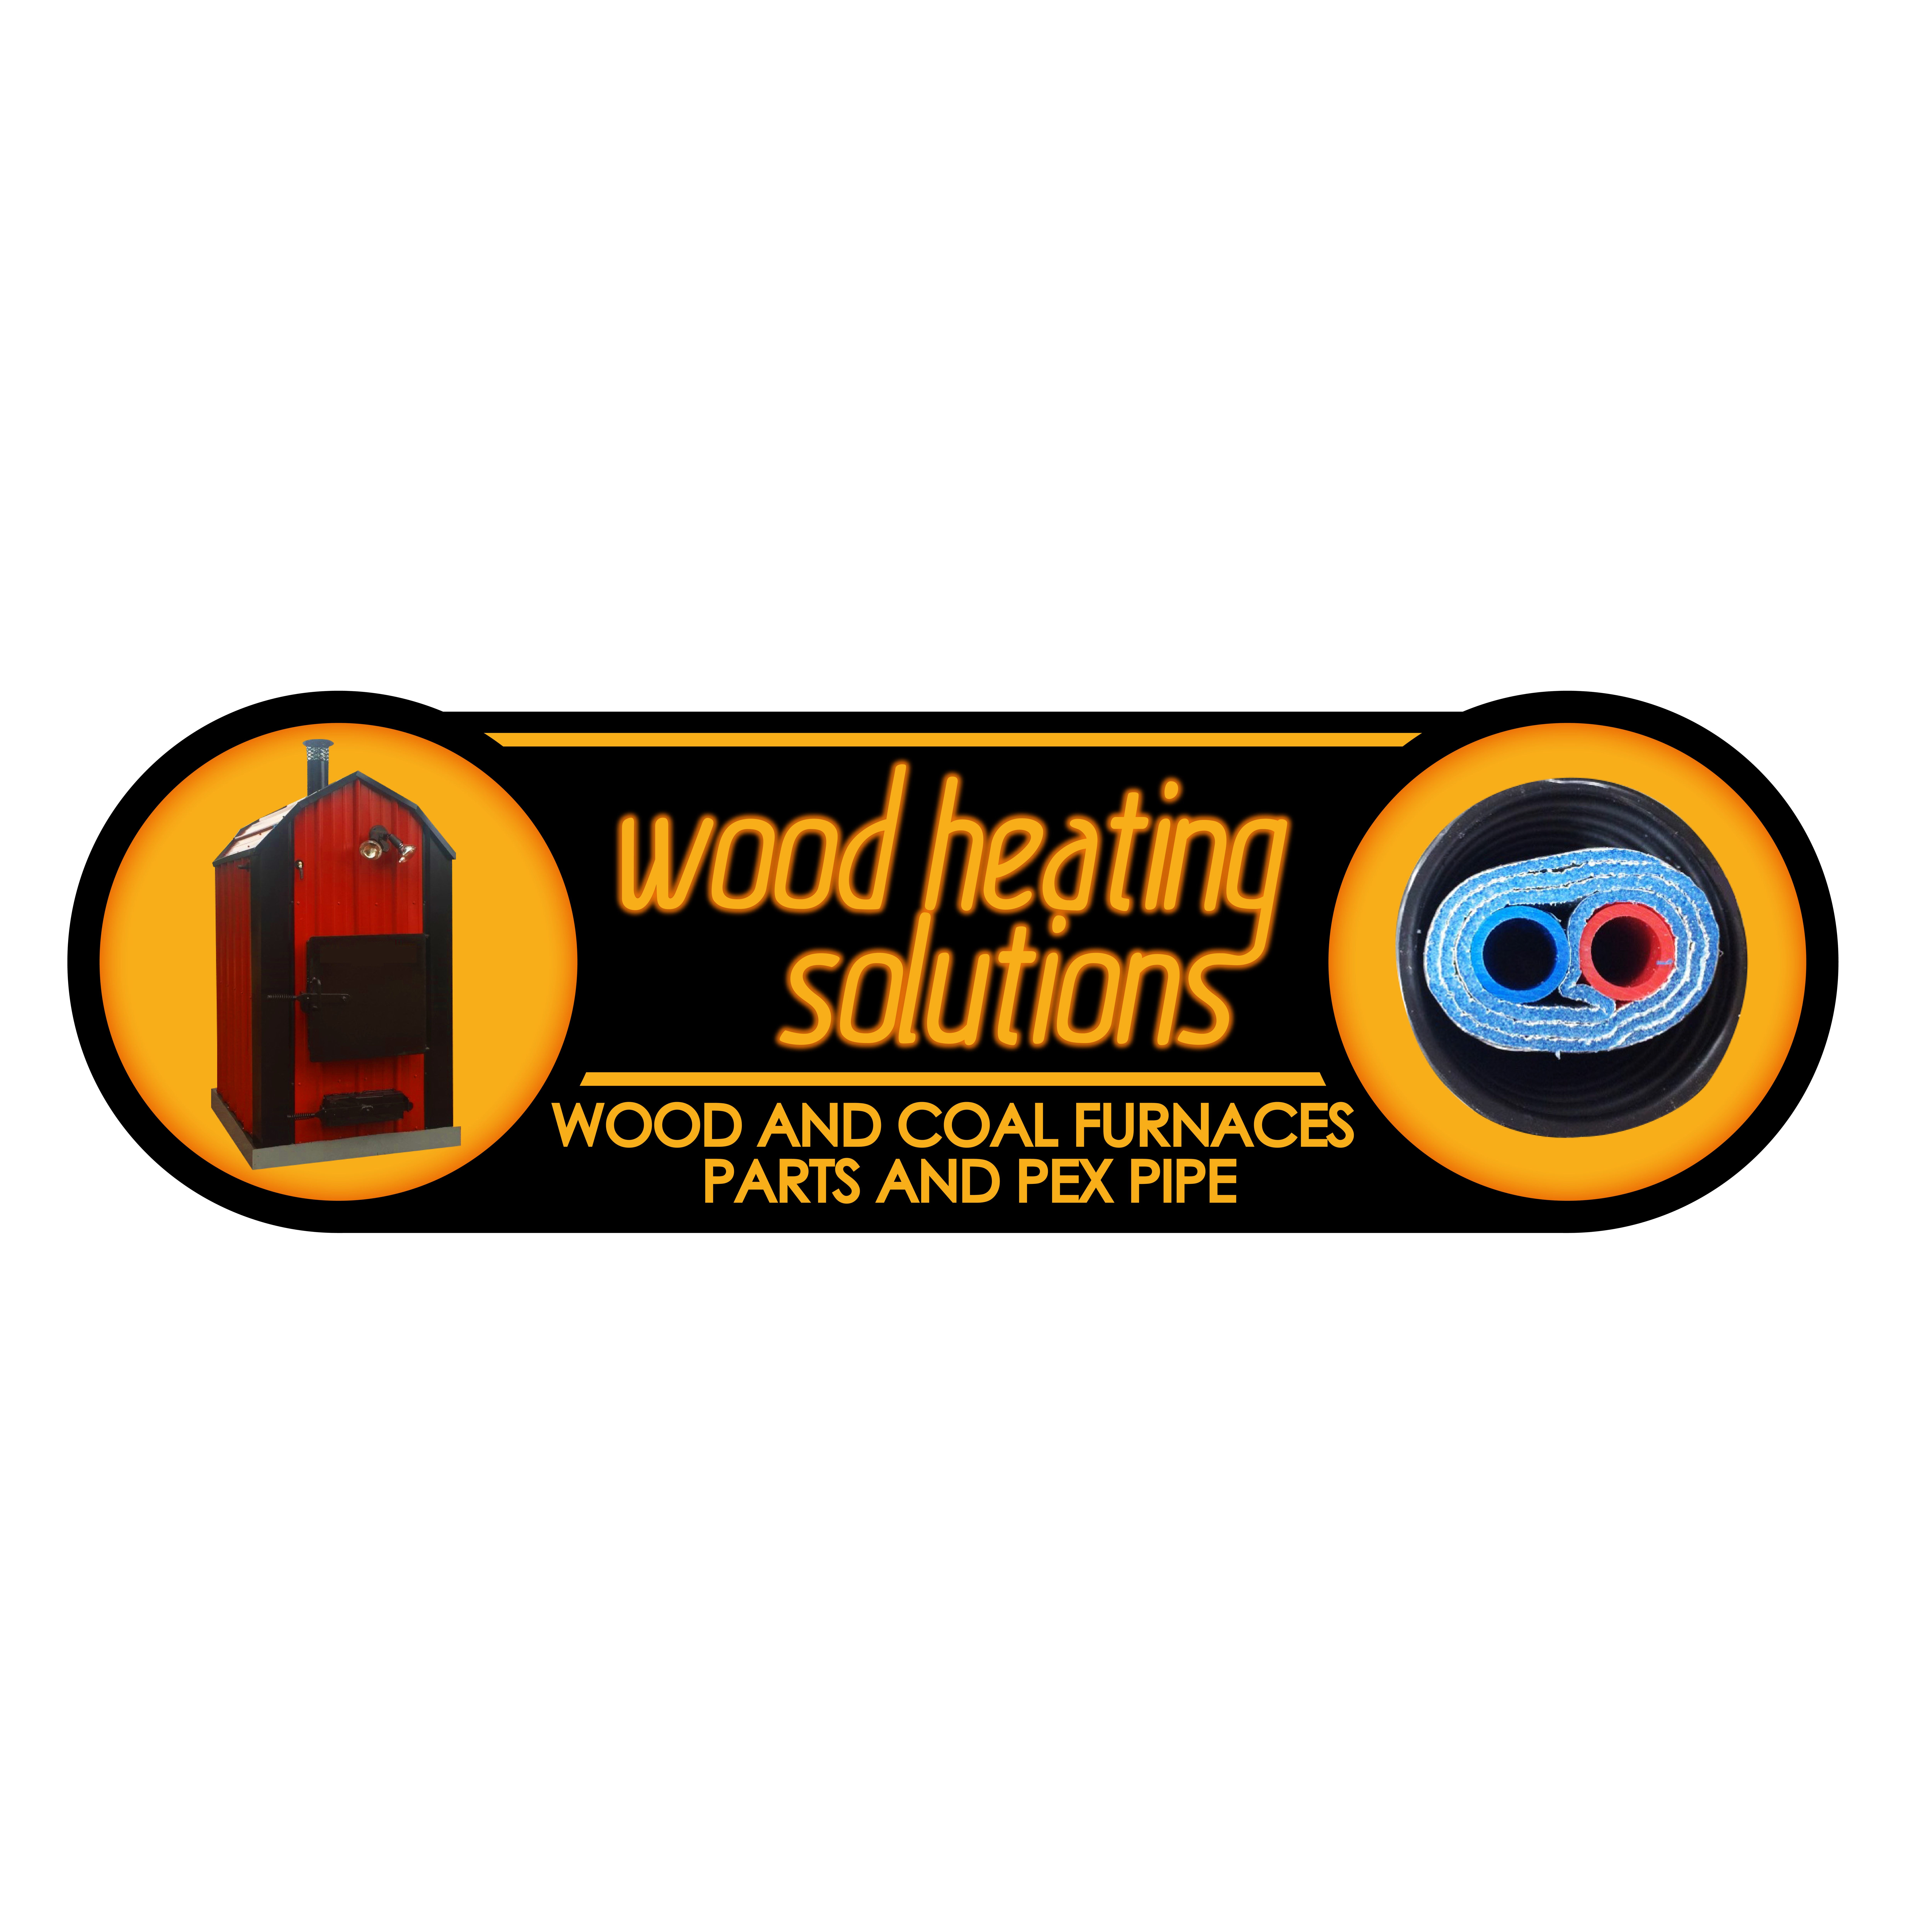 Wood heating solutions logo